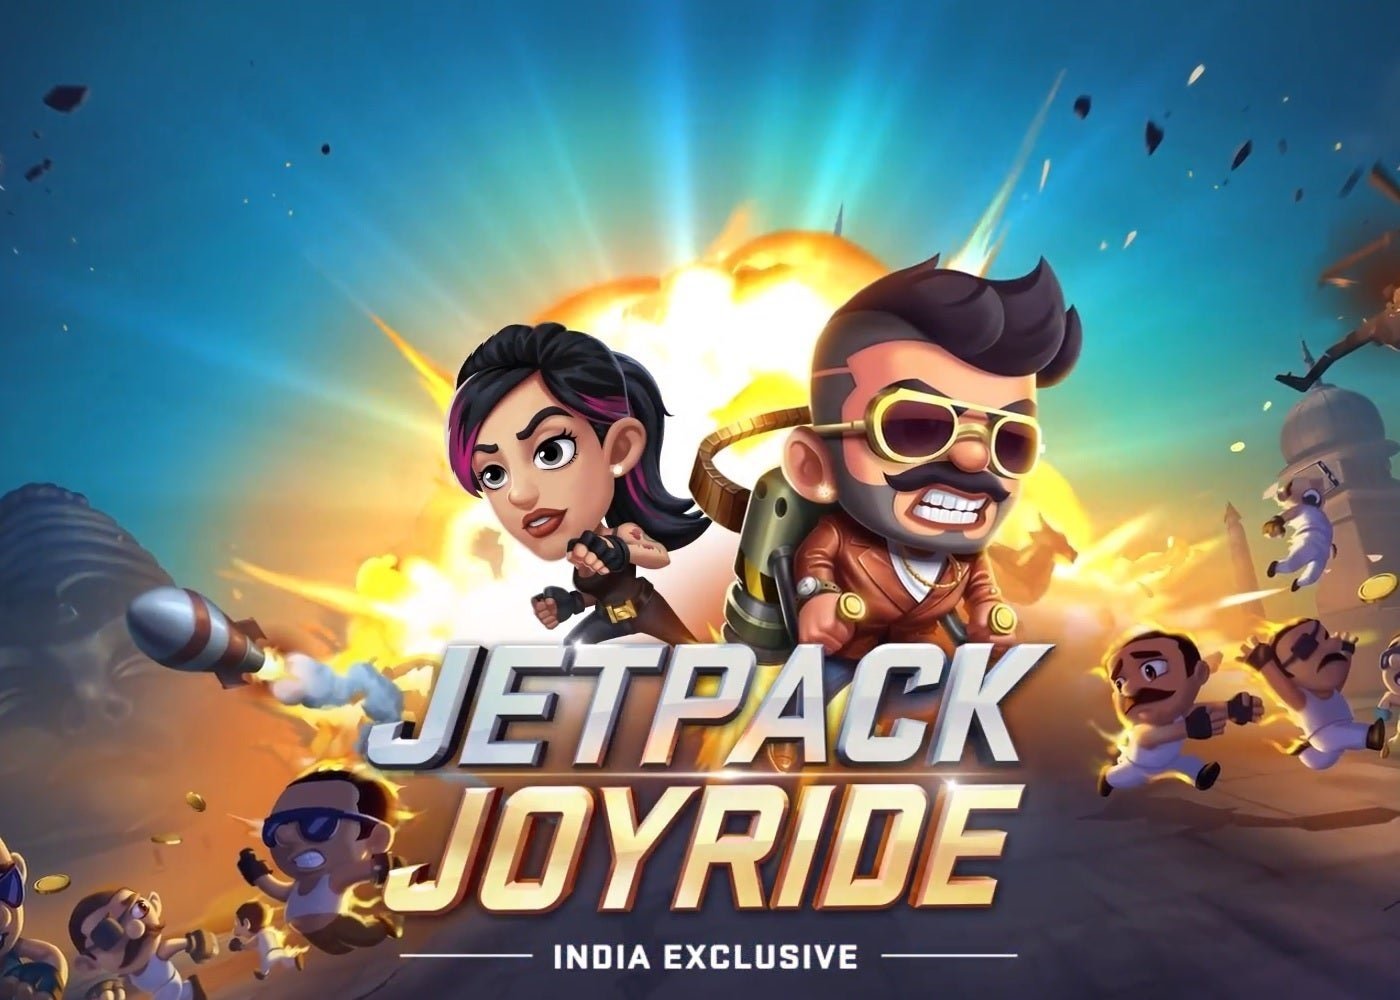 Jetpack joyride india